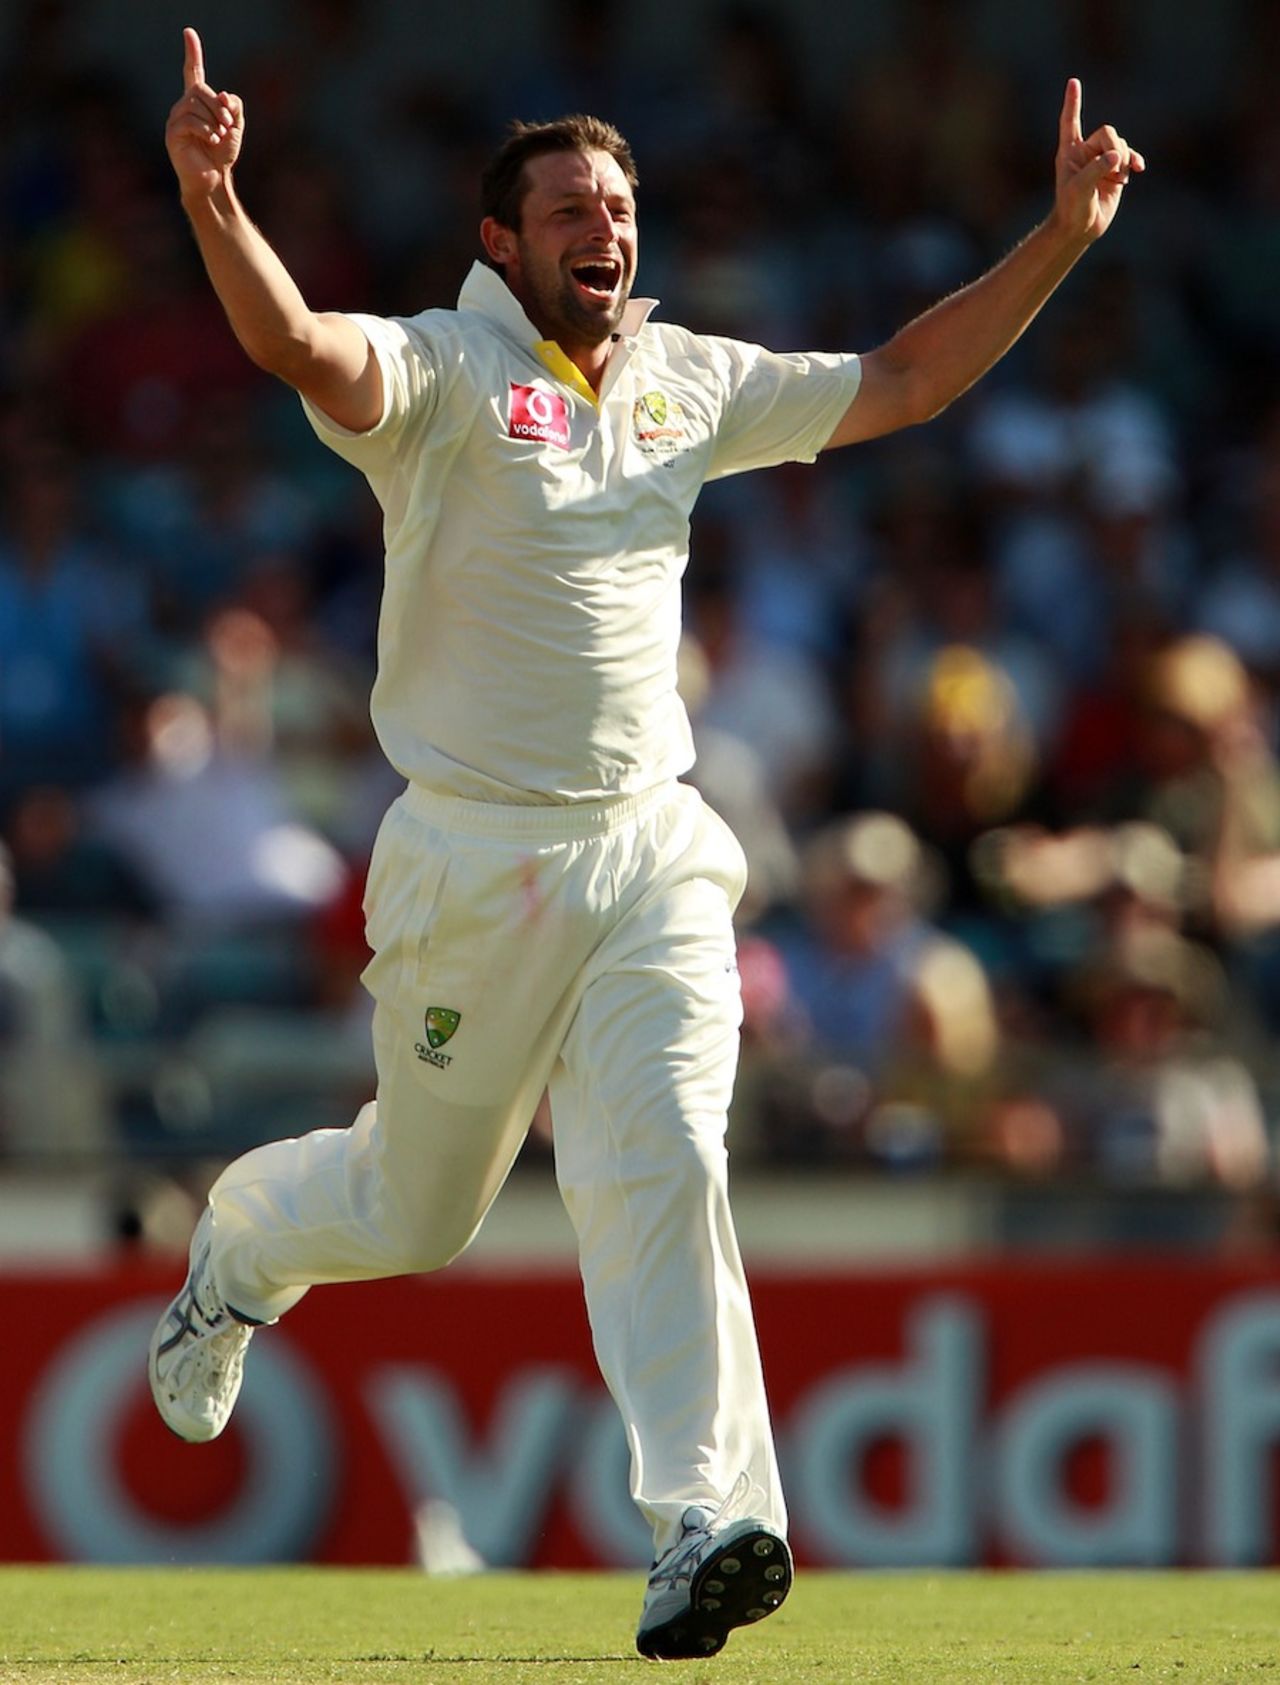 Ben Hilfenhaus had VVS Laxman caught in the slips, Australia v India, 3rd Test, Perth, 2nd day, January 14, 2012